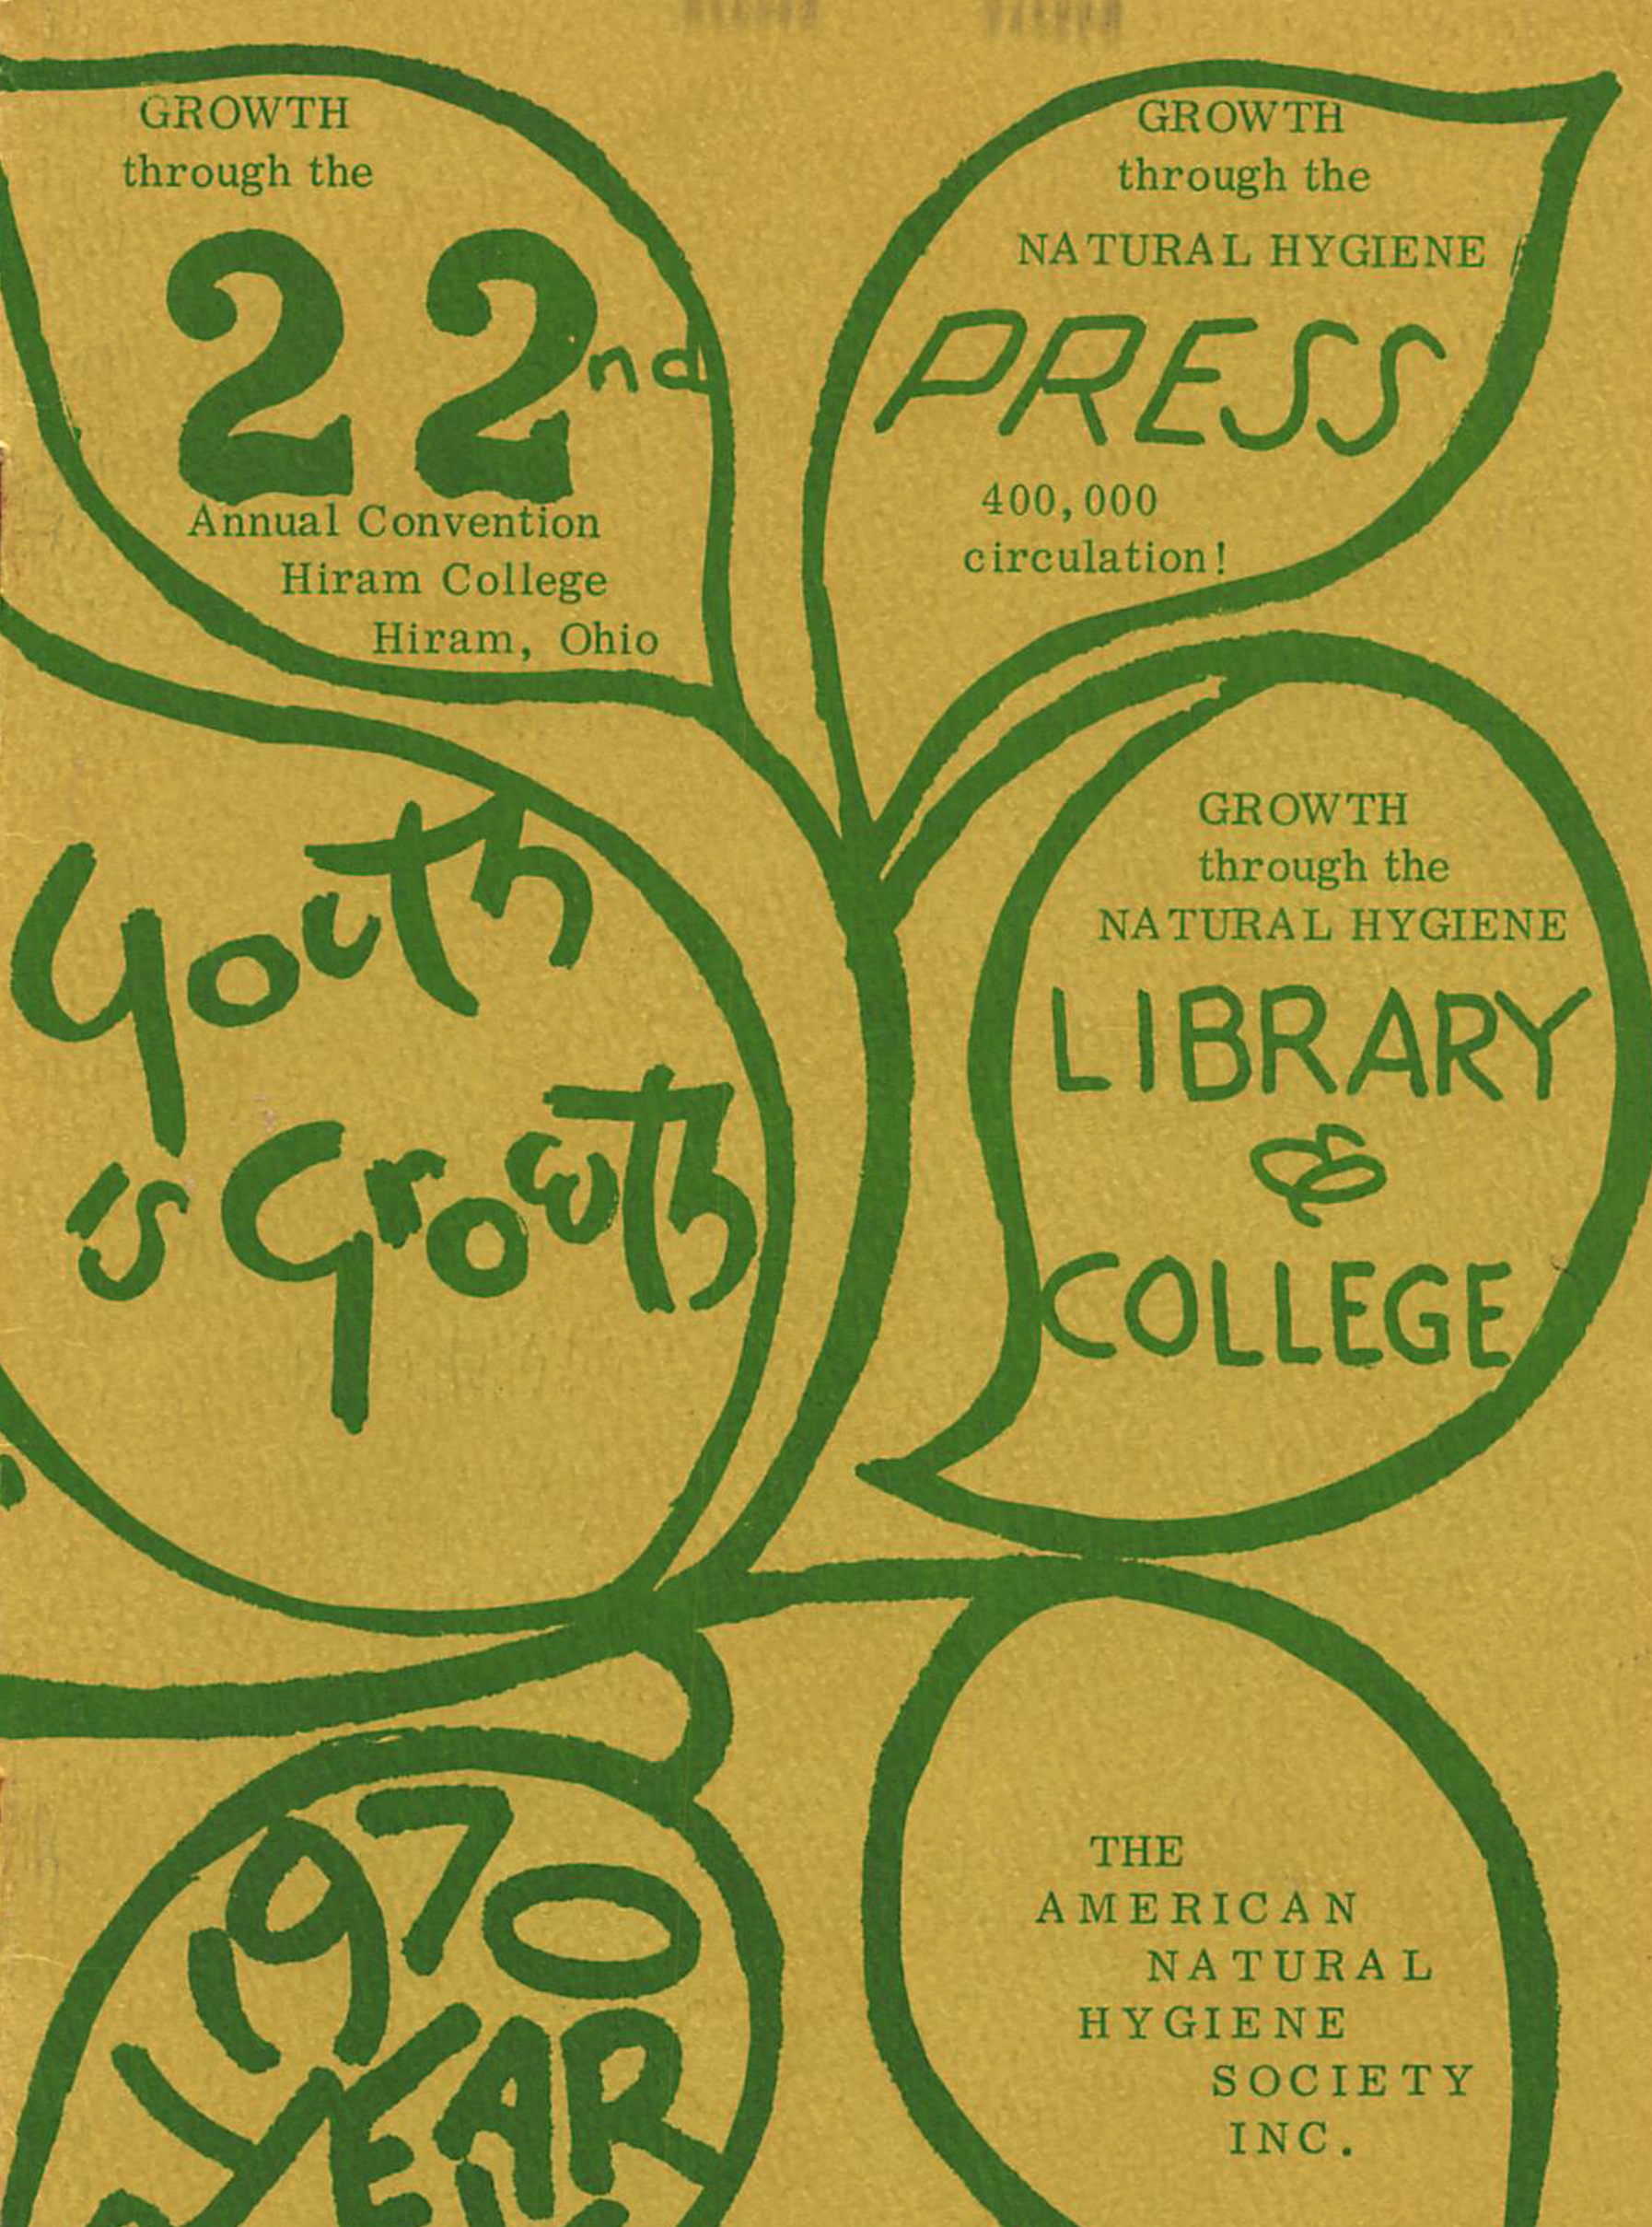 Conference Program. Hiram, 1970